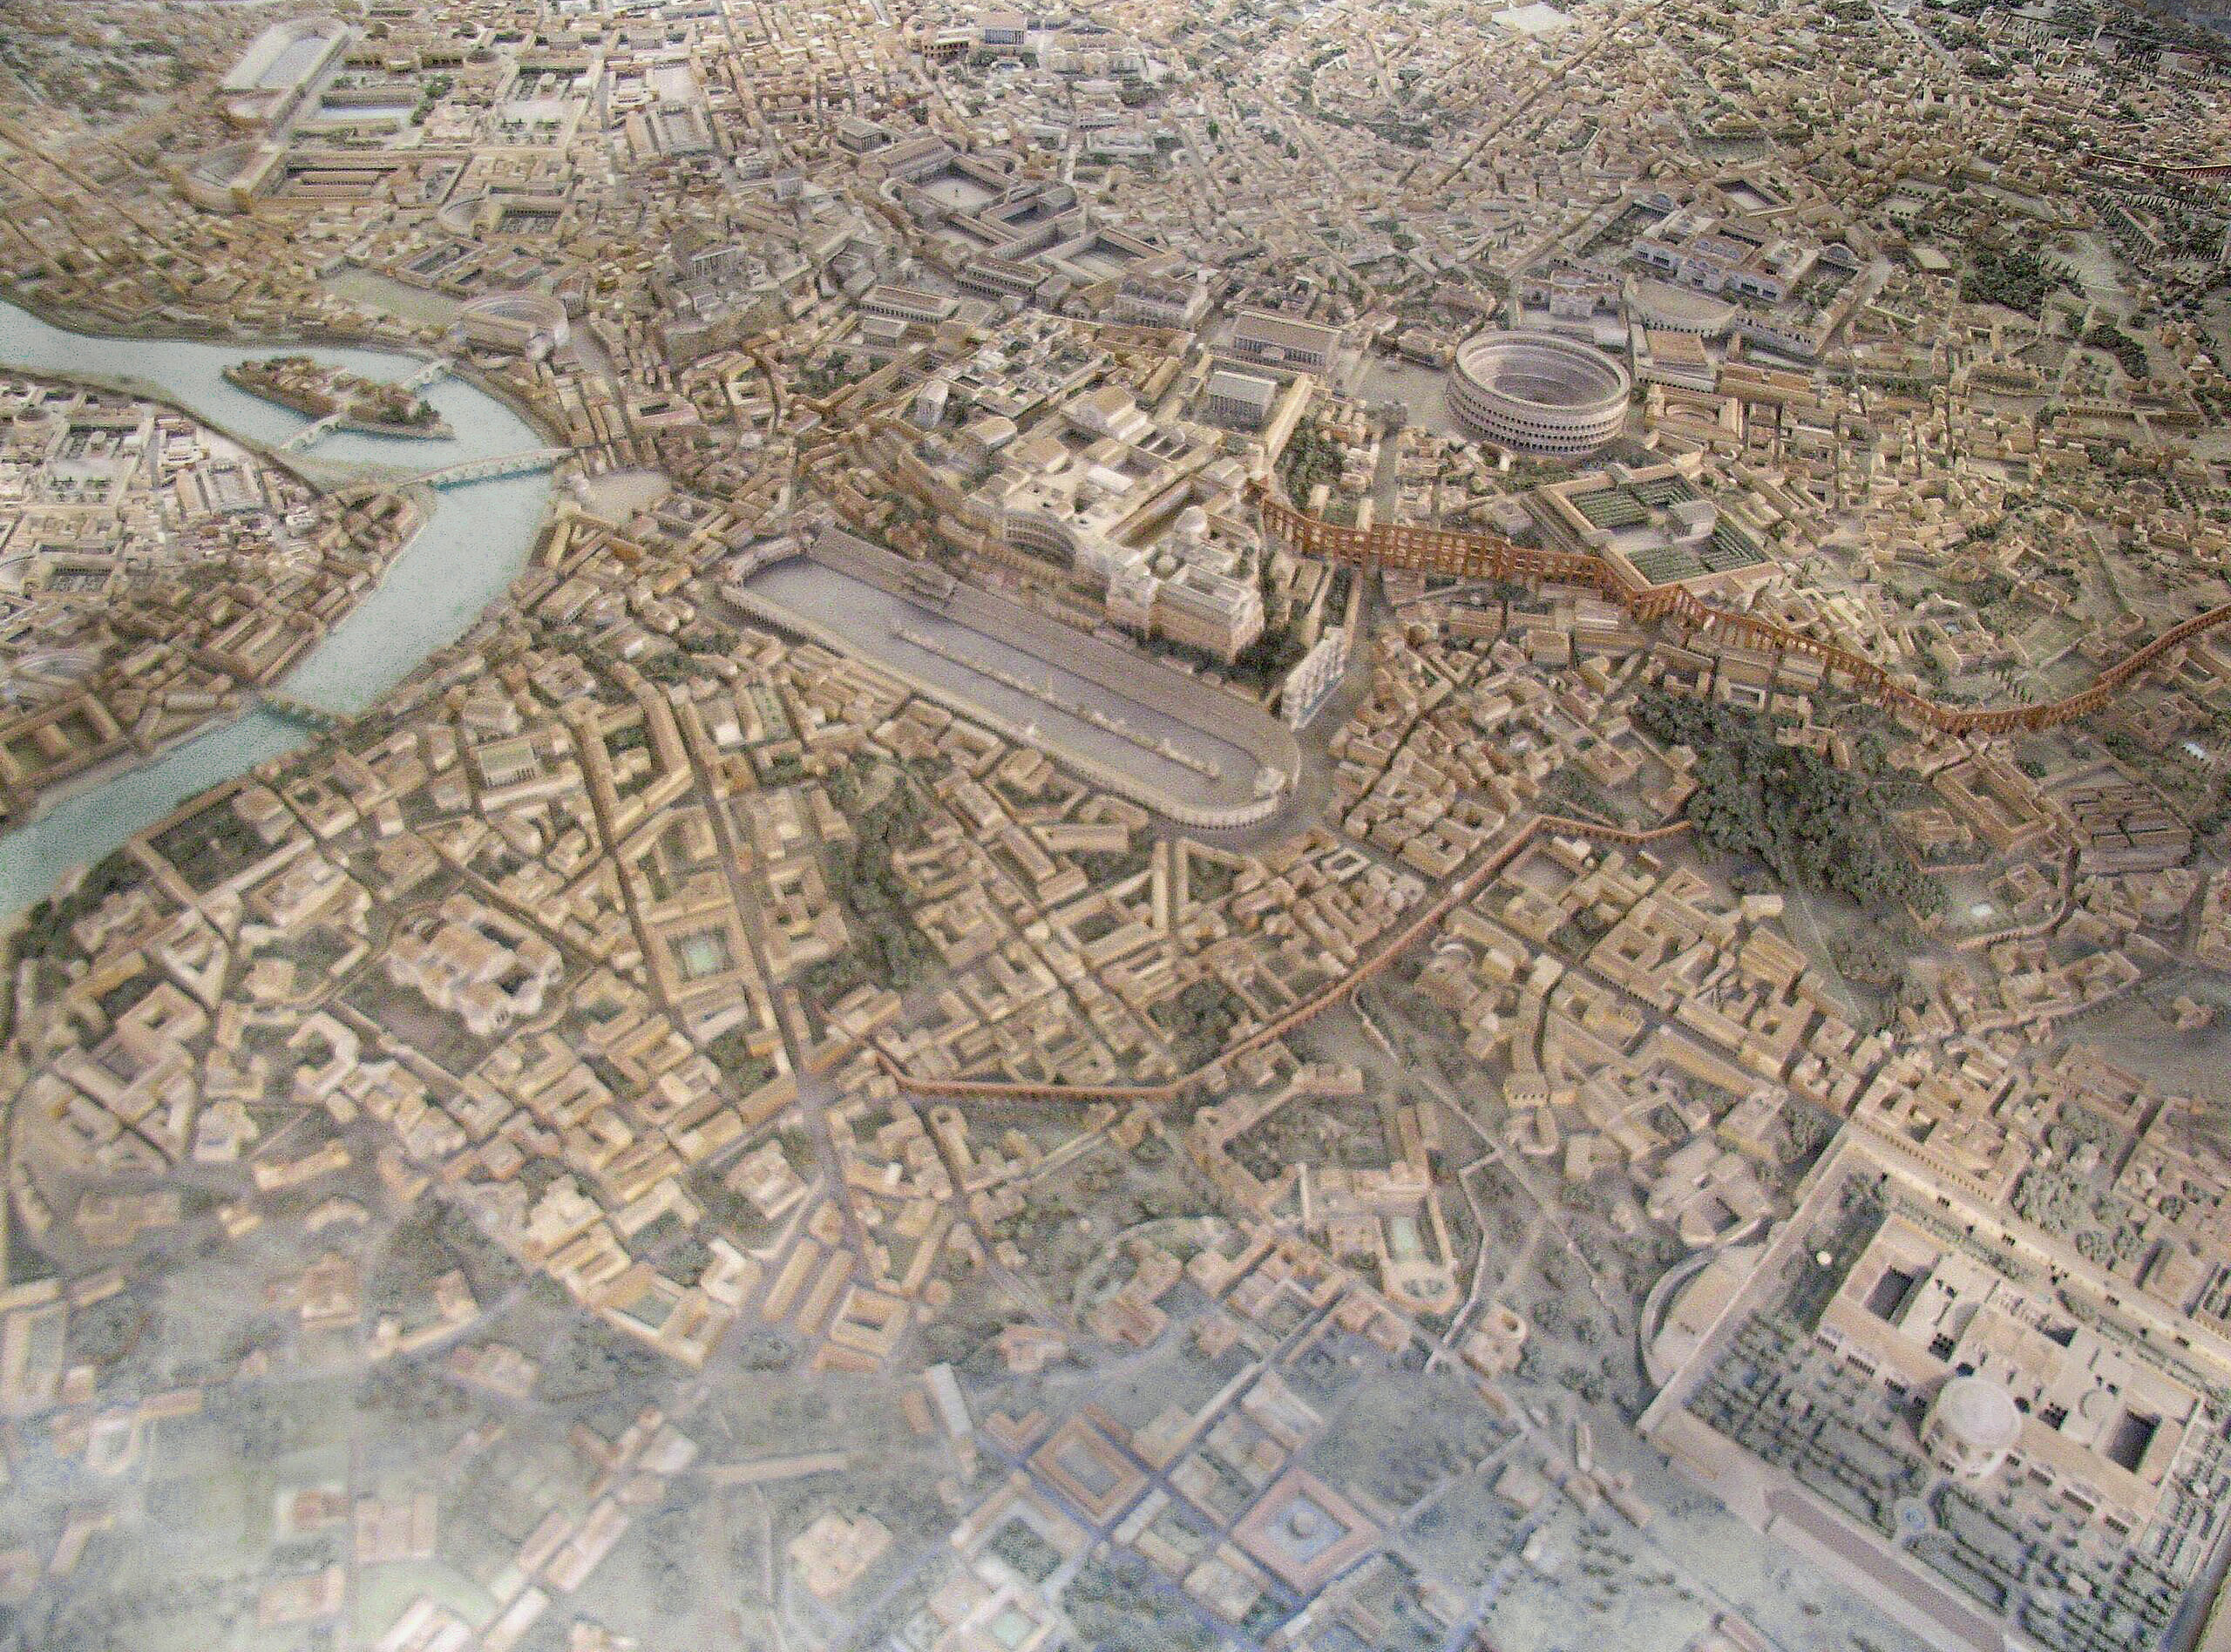 Modell av antikens Rom.